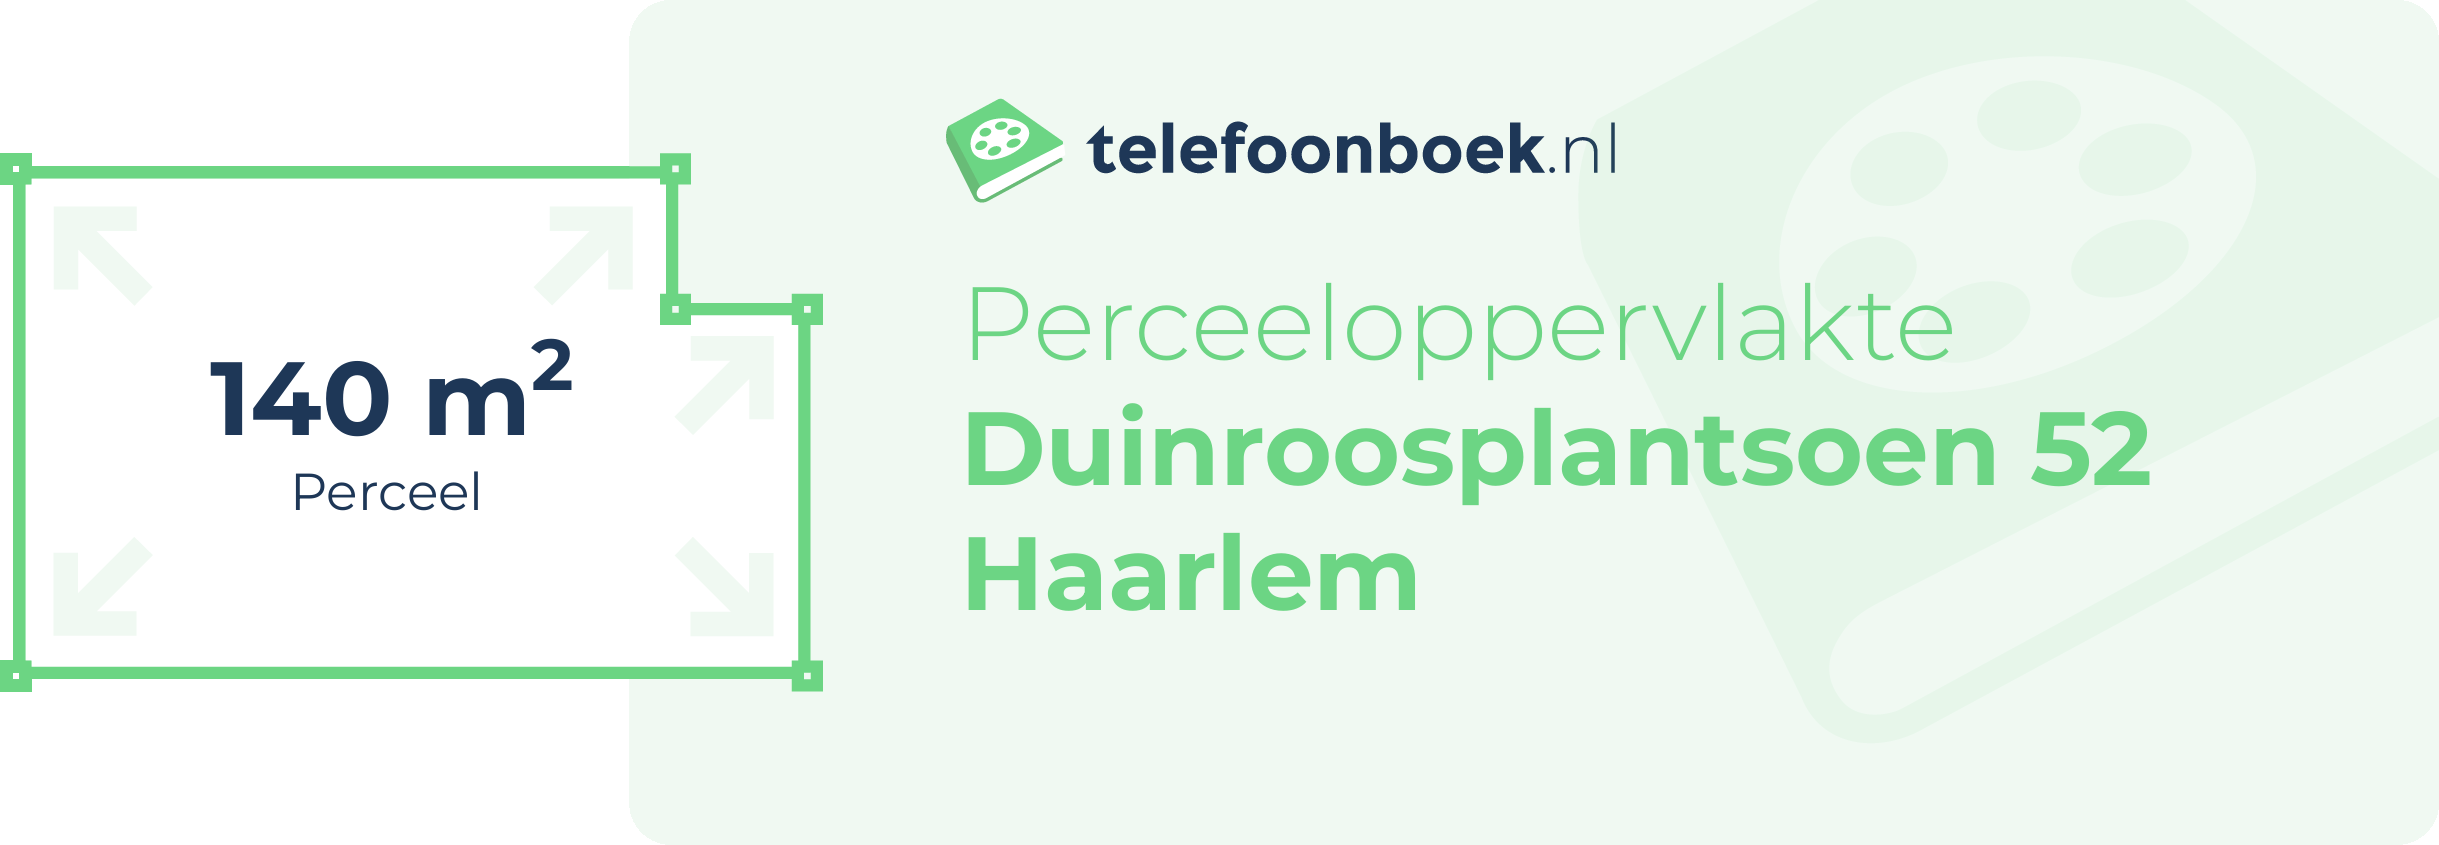 Perceeloppervlakte Duinroosplantsoen 52 Haarlem